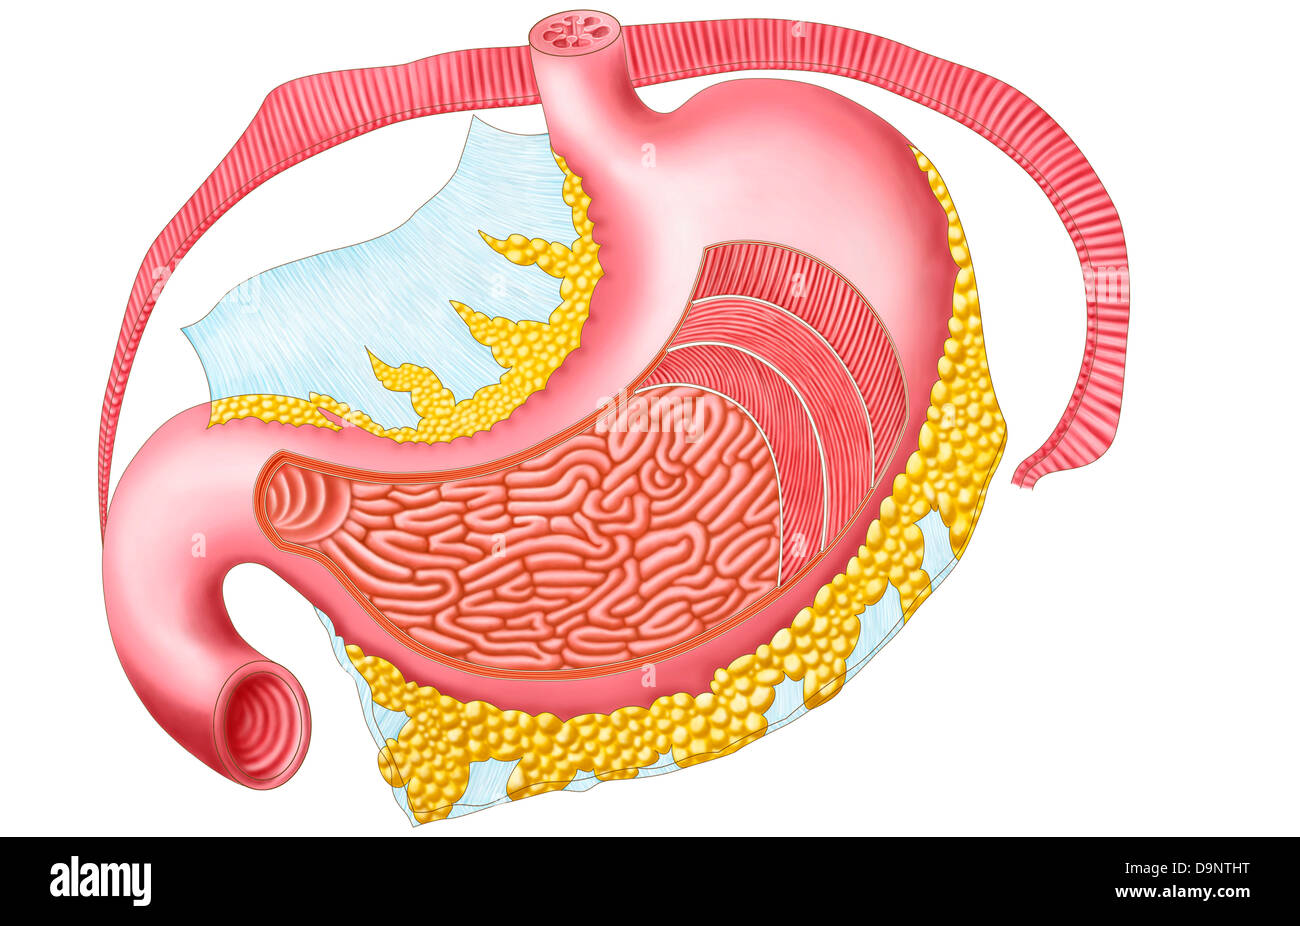 Anatomy of the human stomach. Stock Photo